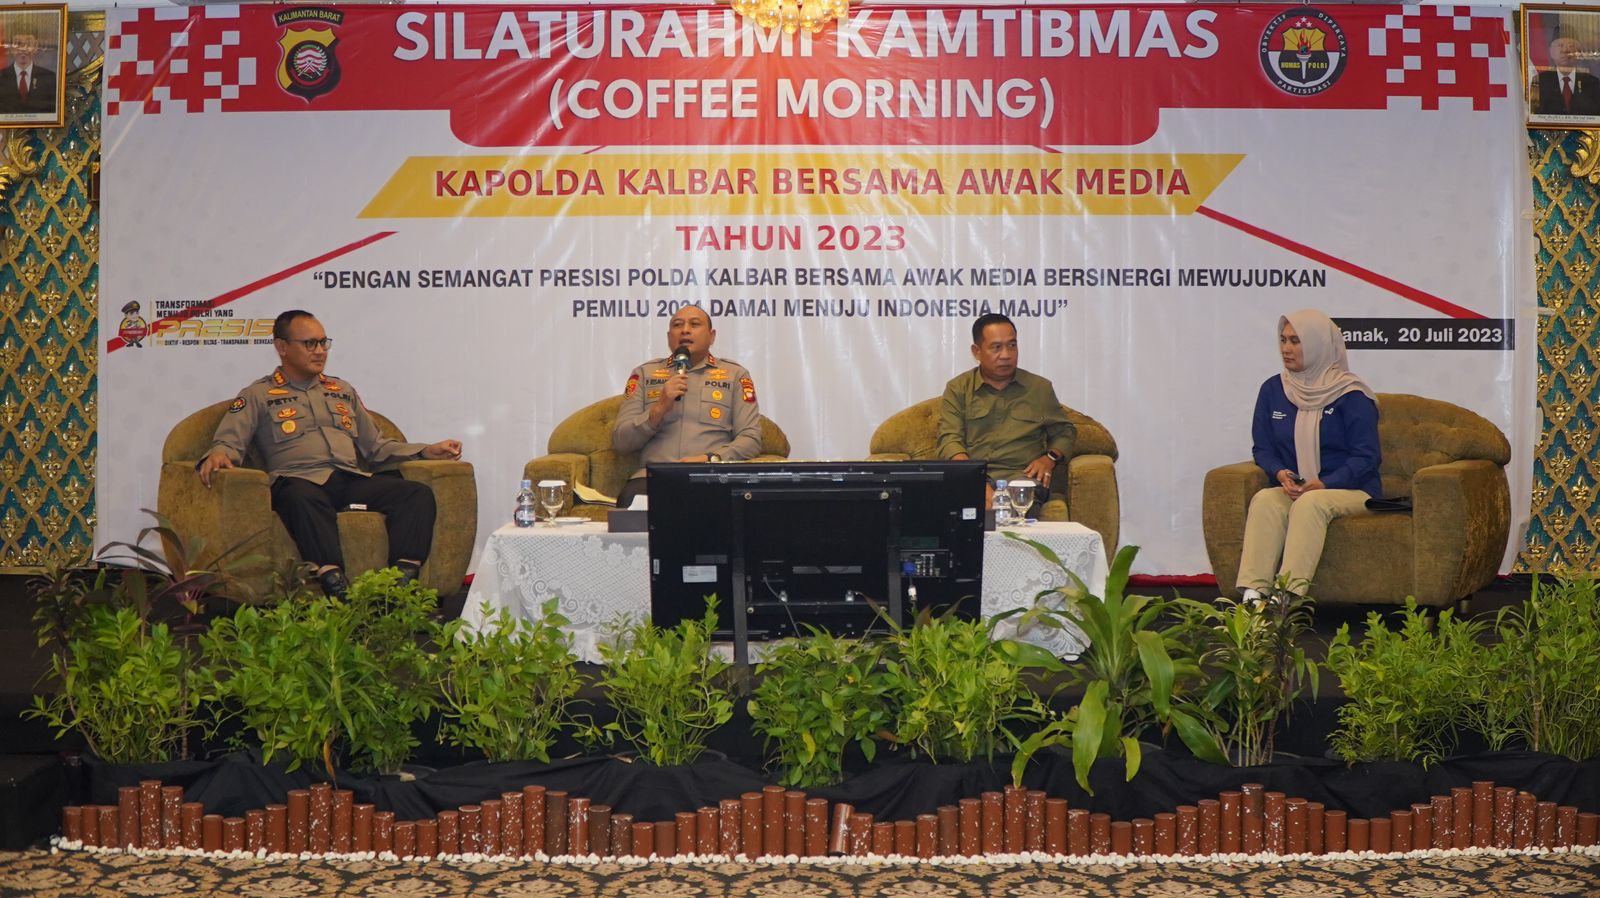 Silaturahmi Kamtibmas bersama awak media di Grand Hotel Mahkota Pontianak, Kamis (20/07/2023). (Foto: Indri)